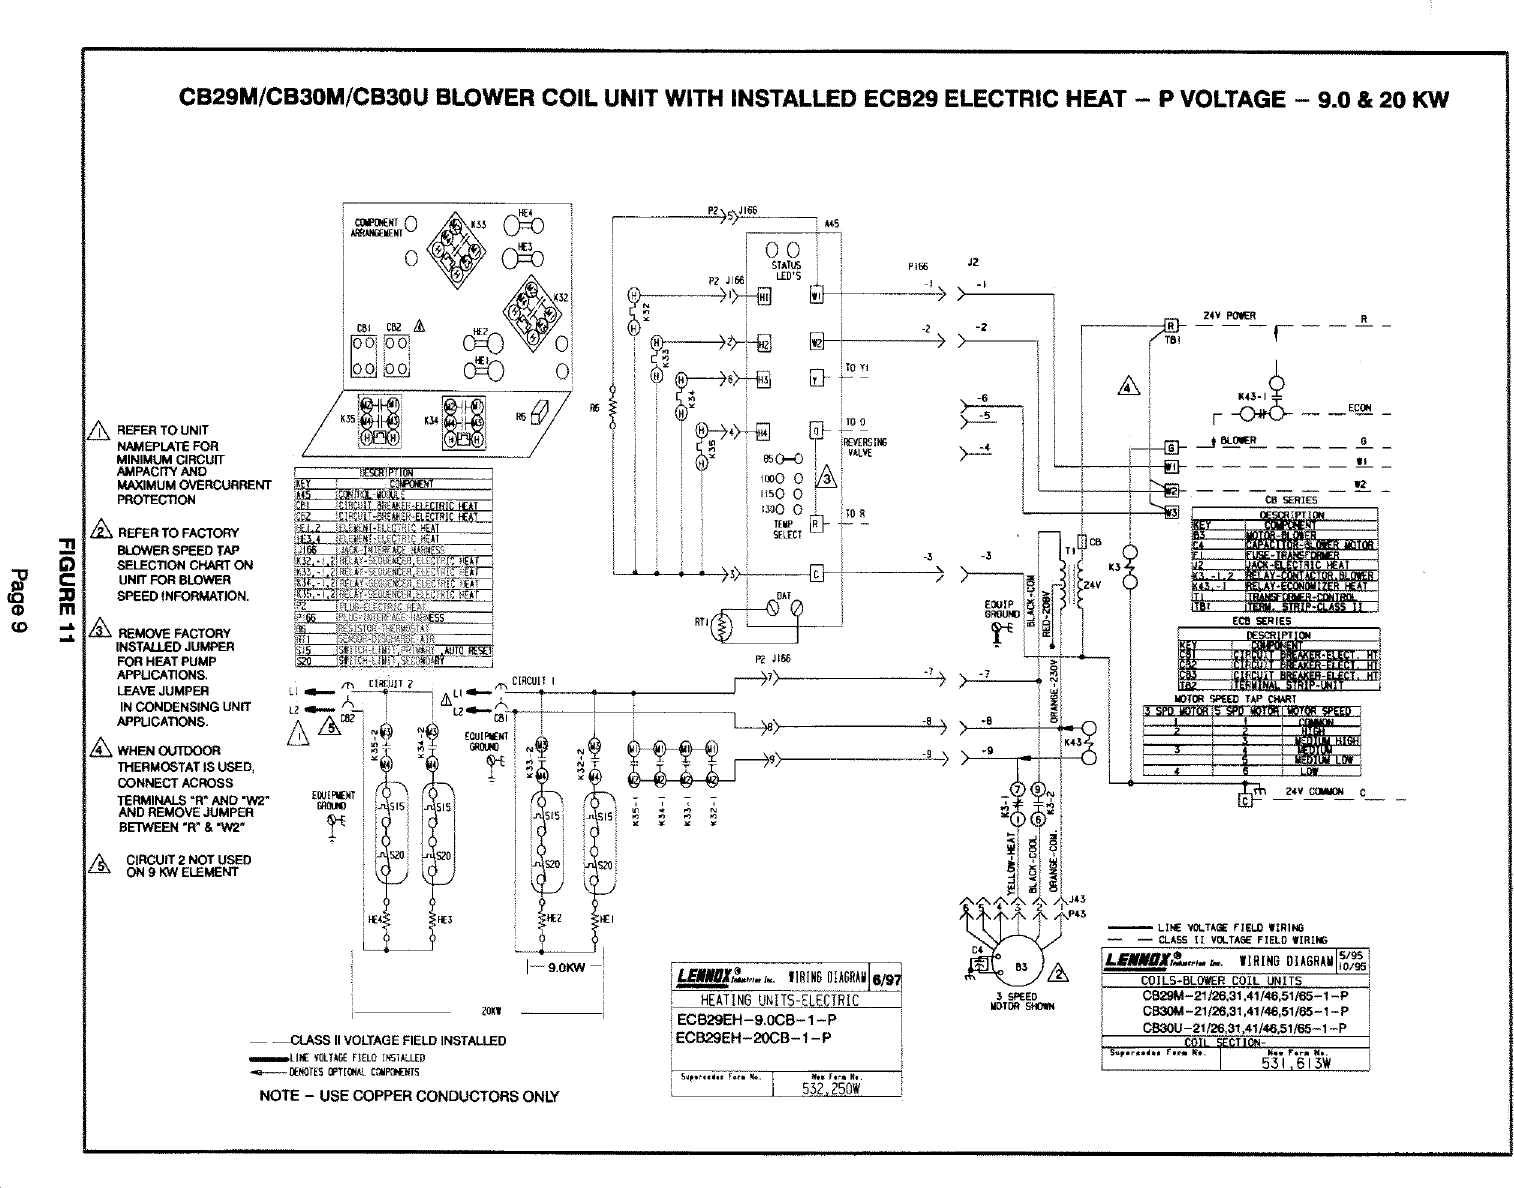 Lennox Heat Pump Air Handler Wiring Diagram from usermanual.wiki